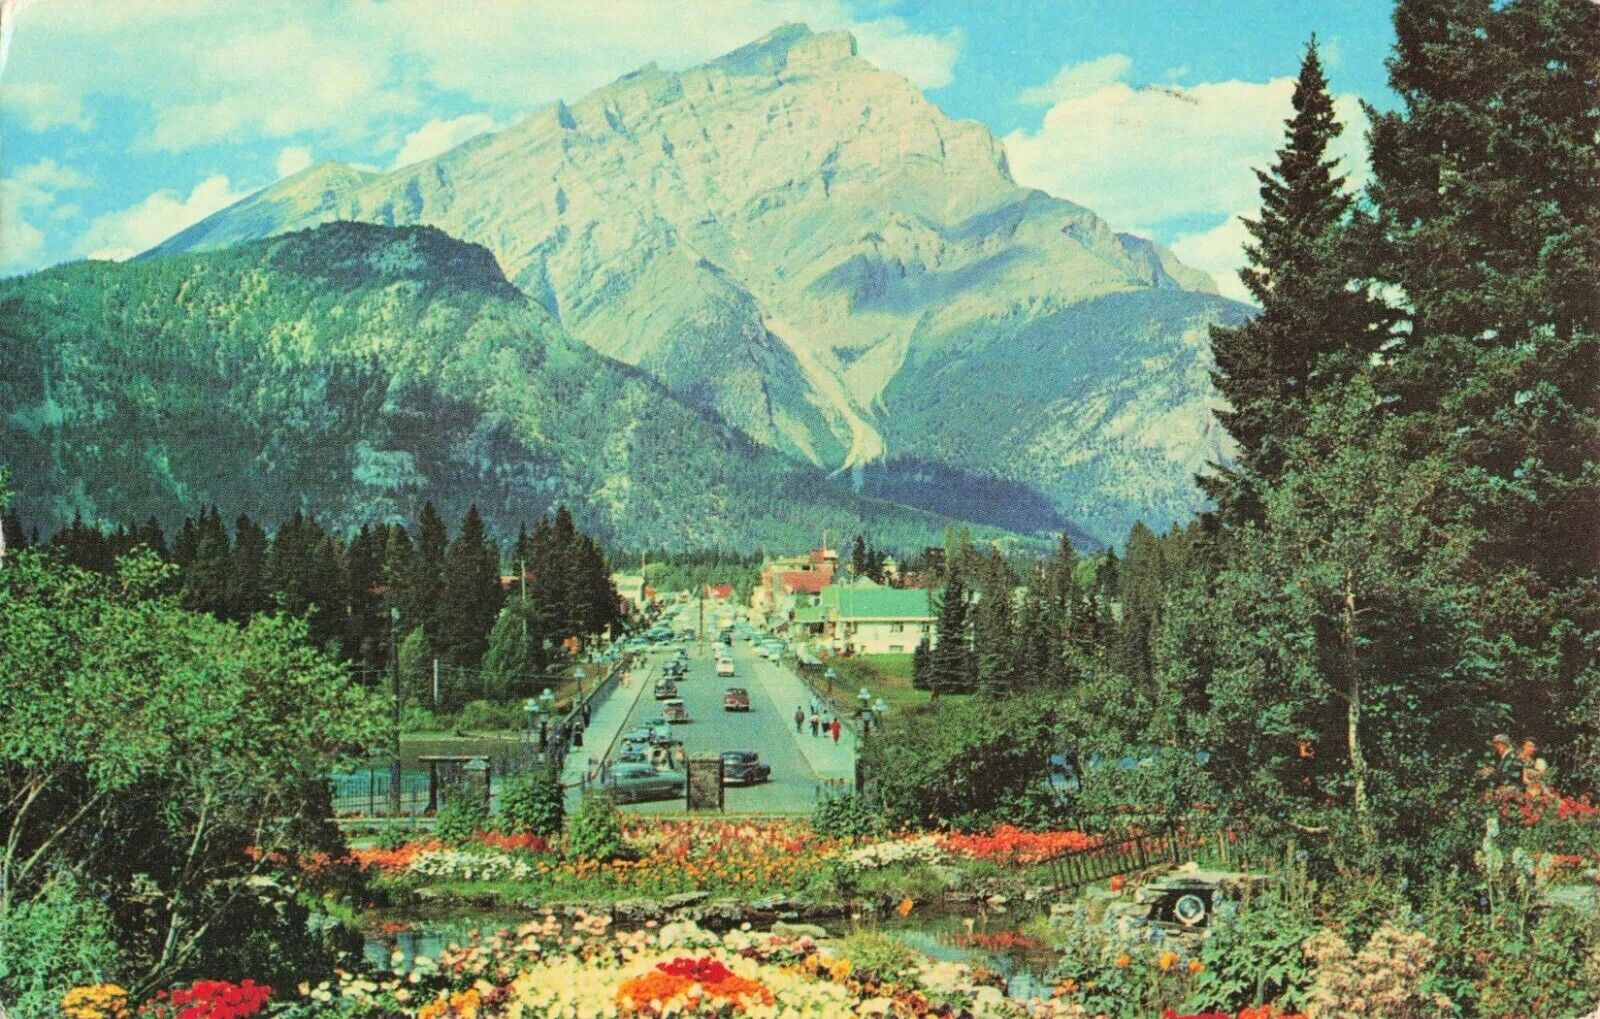 Picturesque Banff Avenue & Cascade Mountain - Banff Alberta Canada - Postcard